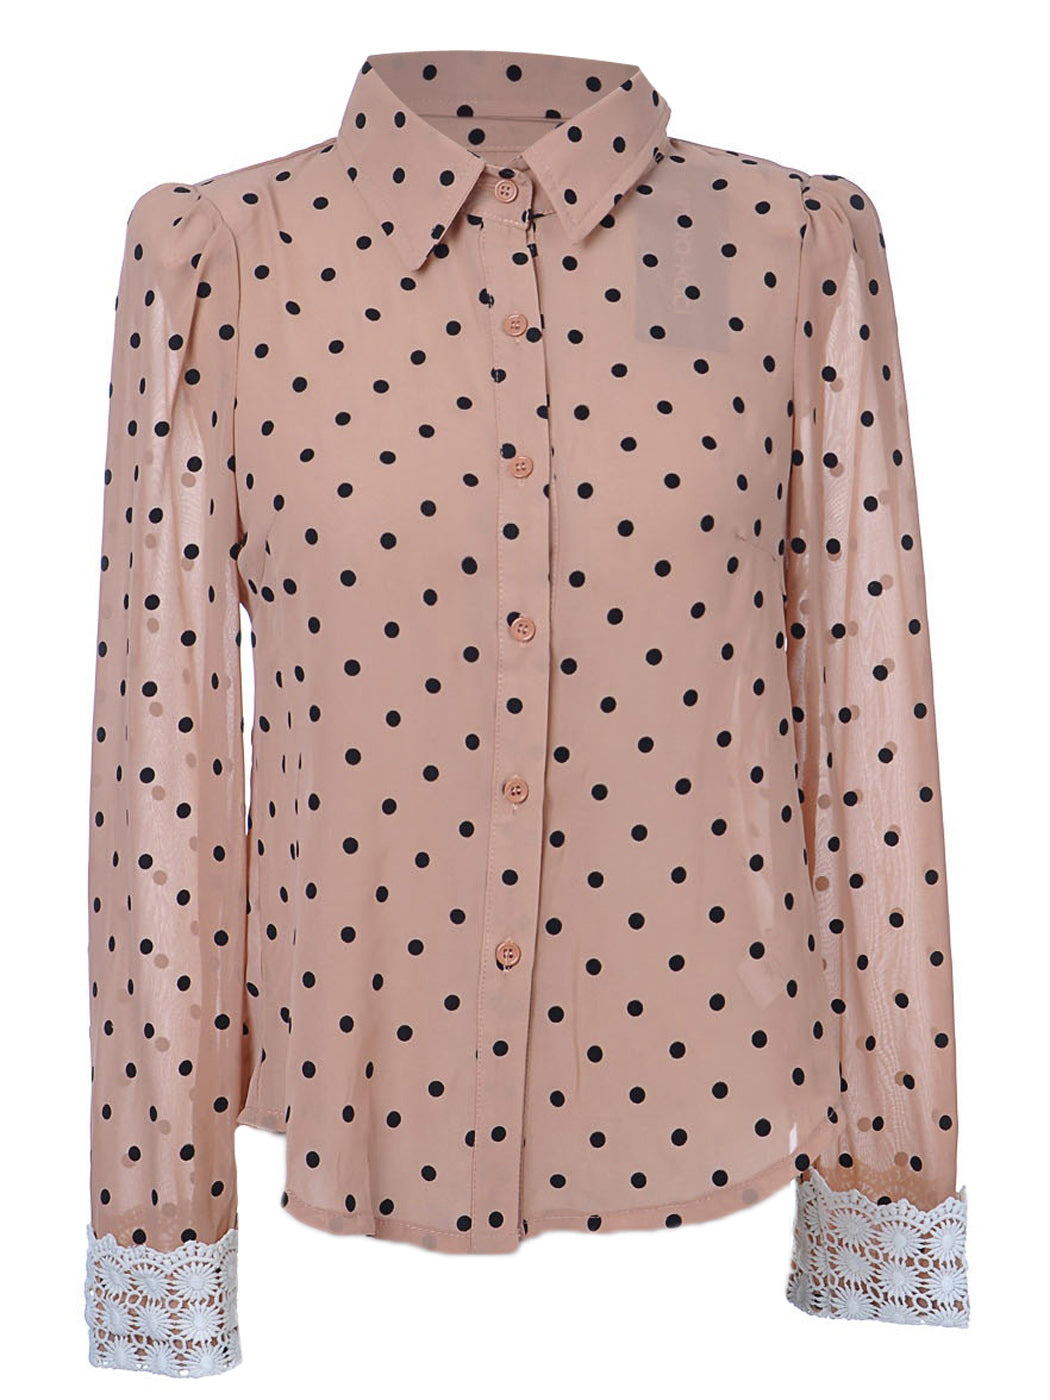 Semi-Sheer Pink Chiffon Button Down Blouse With Polka Dots